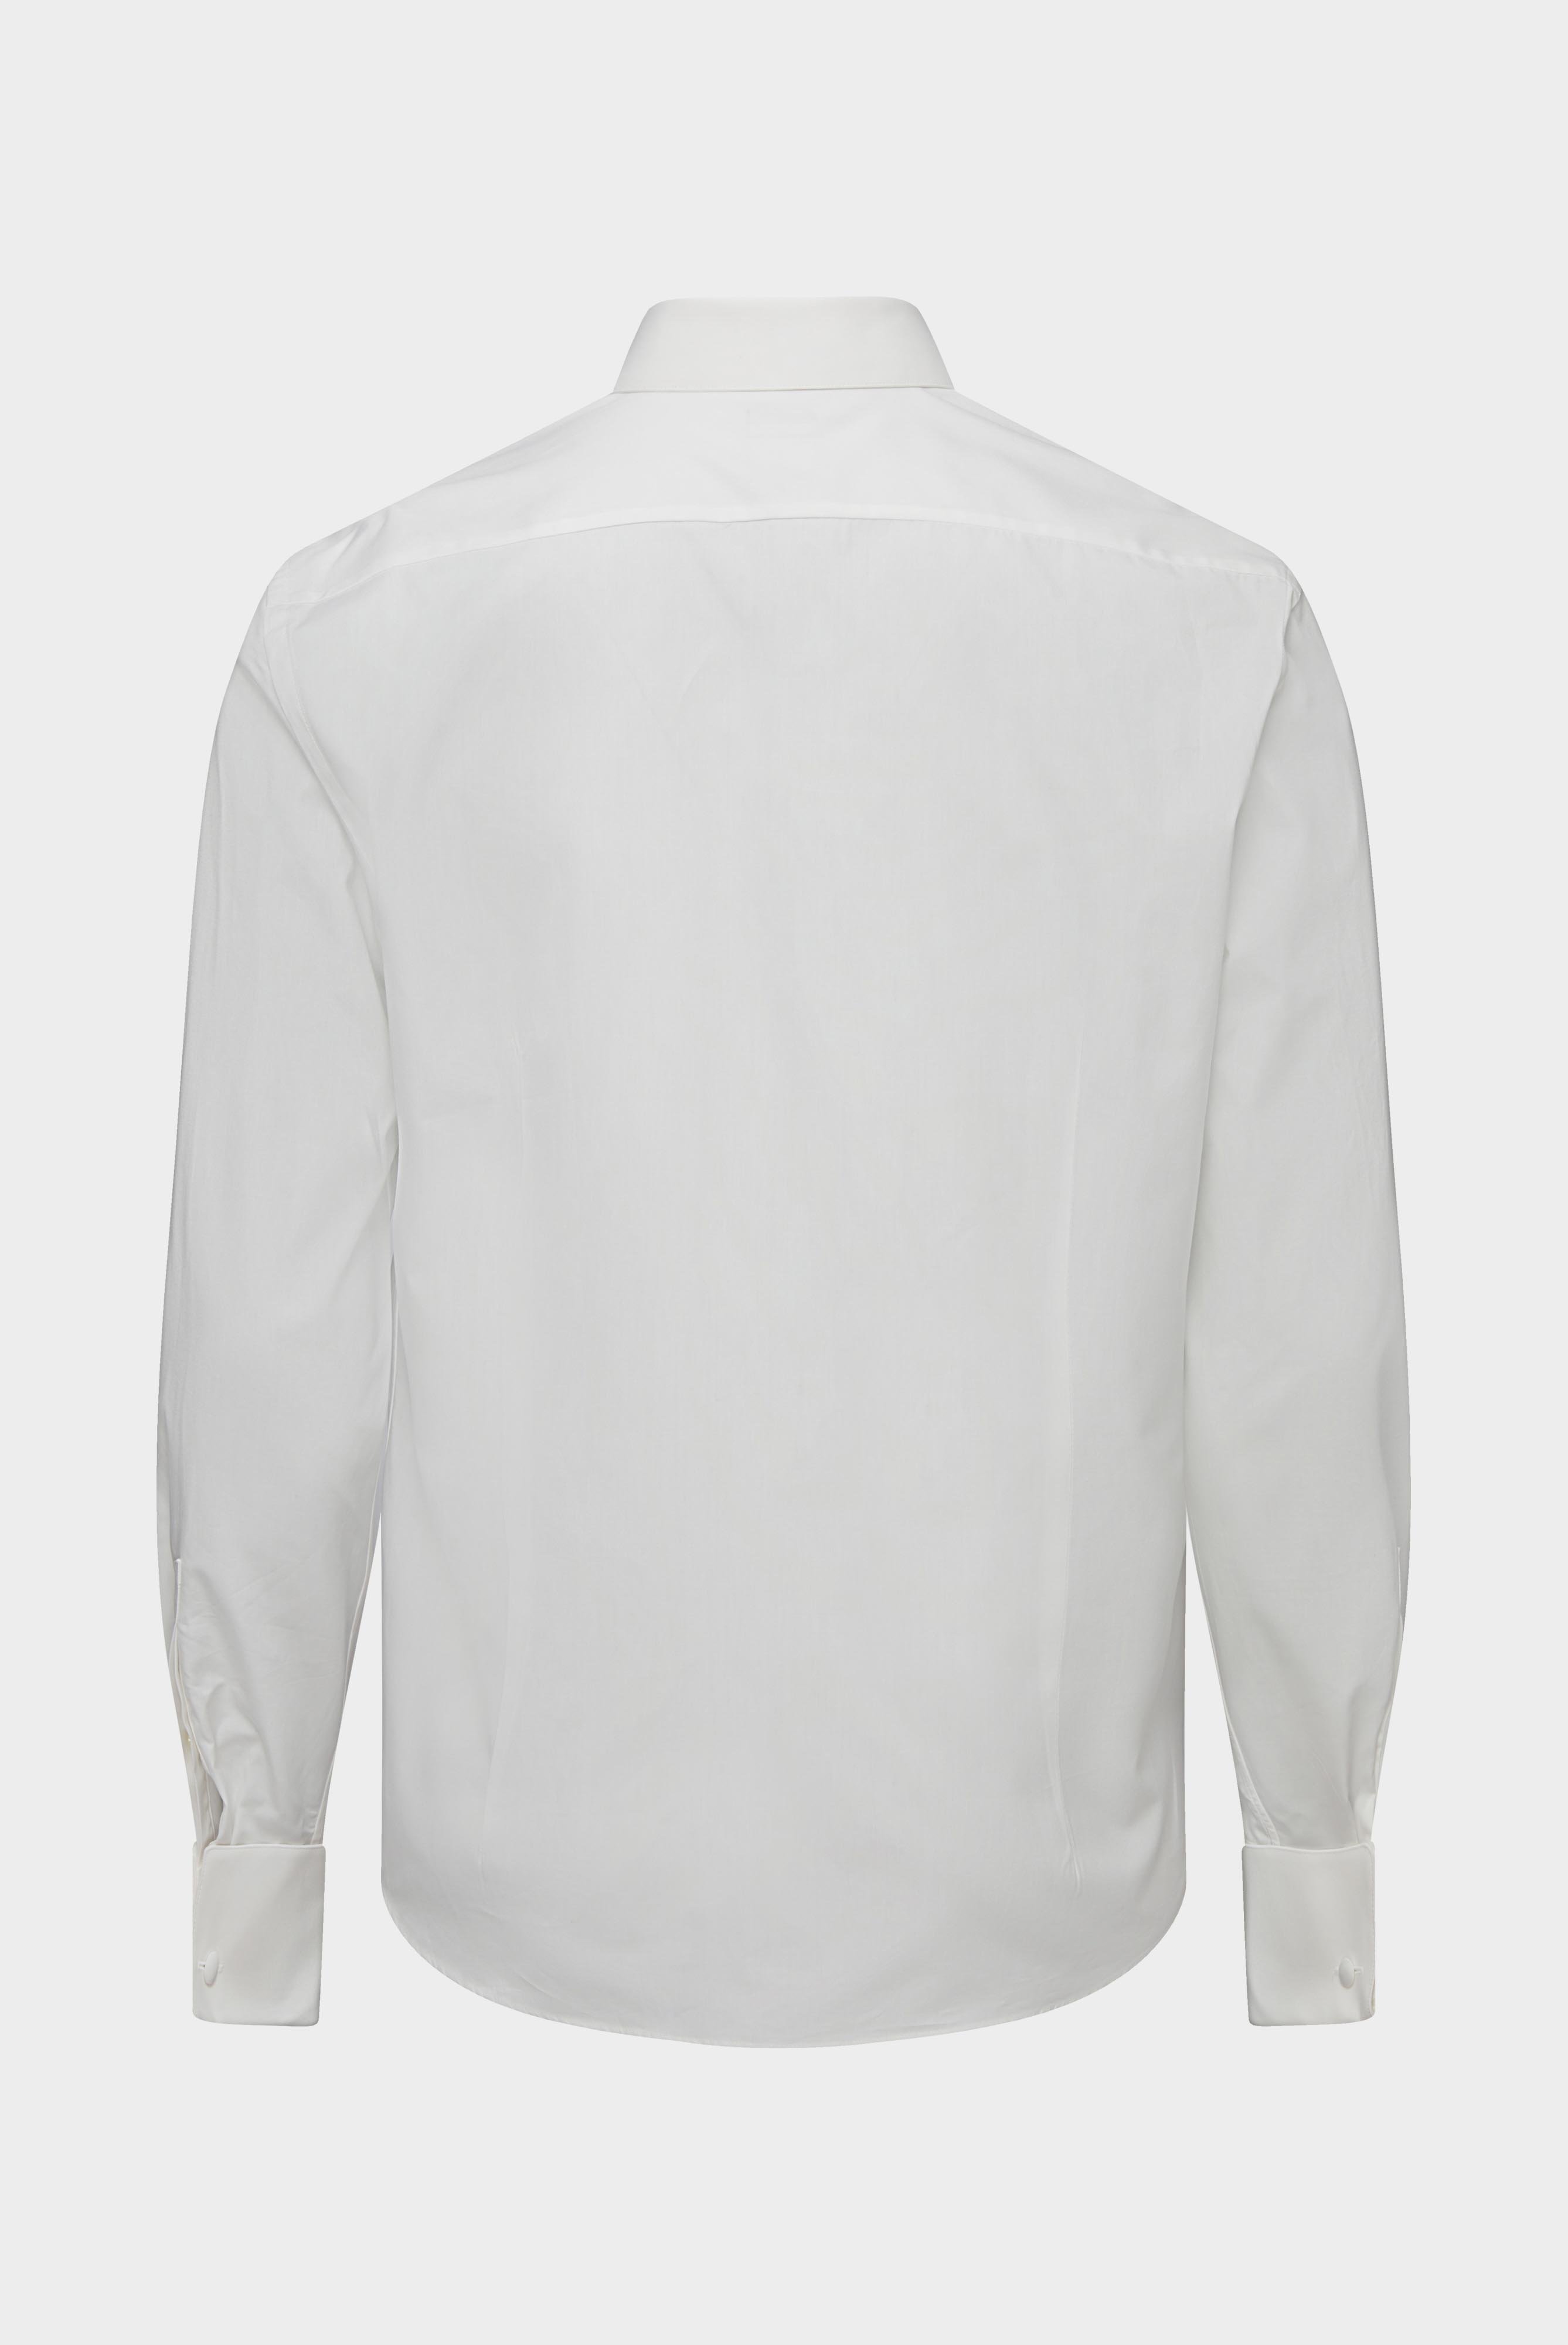 Festliche Hemden+Poplin Evening Shirt+20.2063.NV.130657.100.37